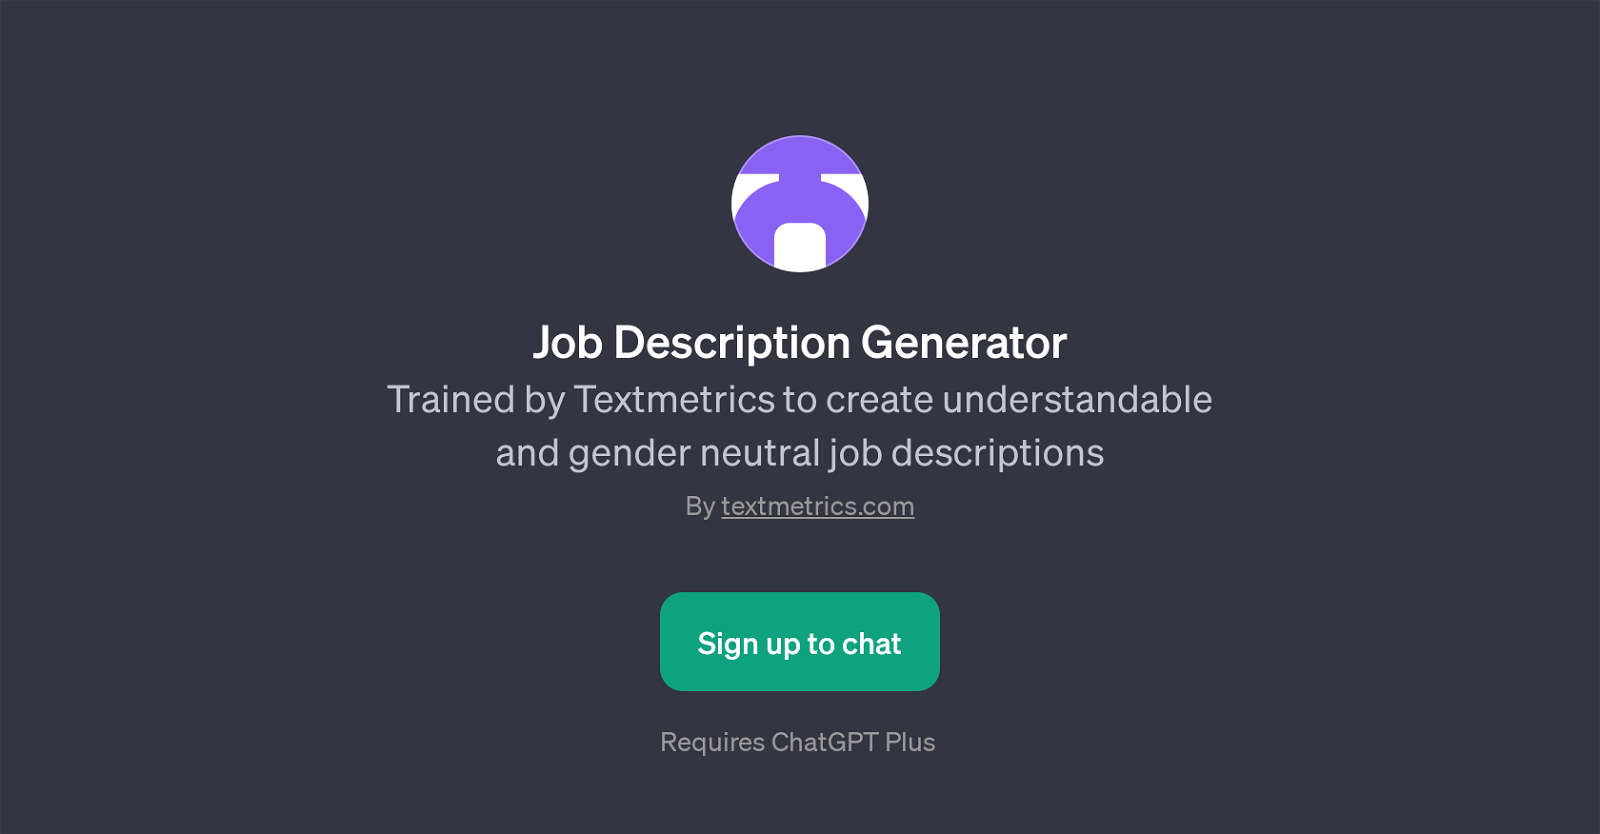 Job Description Generator website